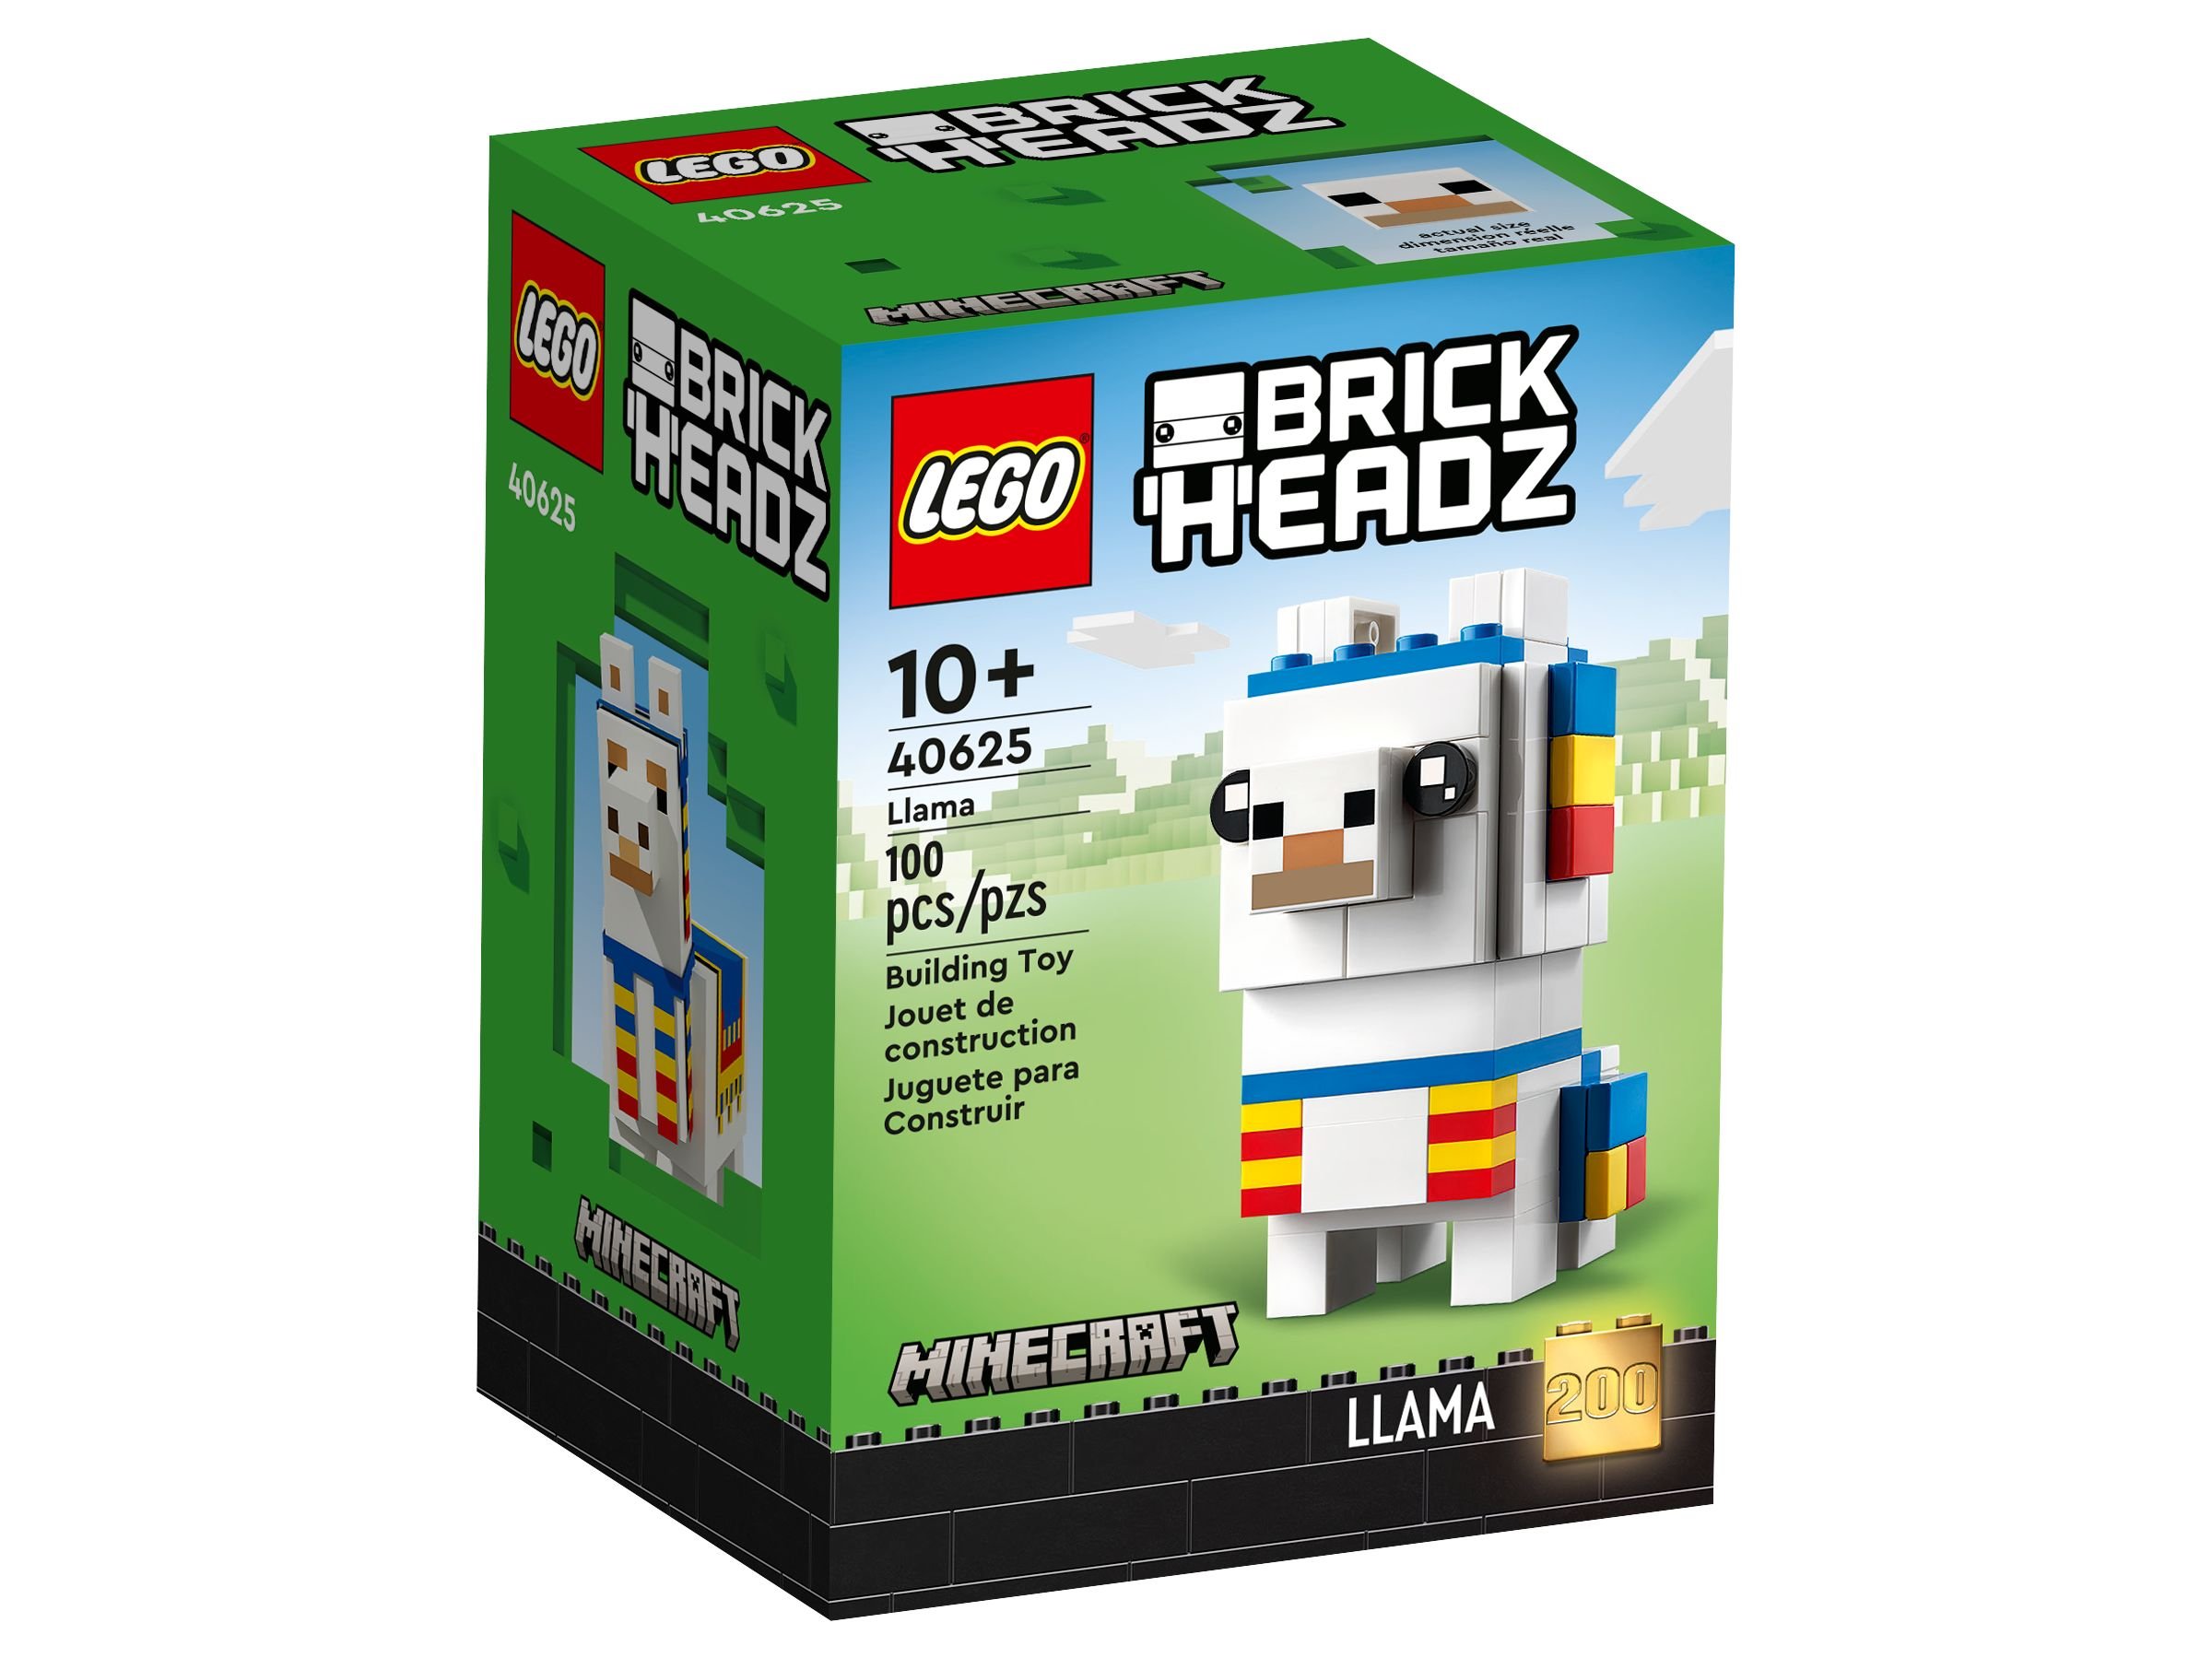 LEGO BrickHeadz 40625 Lama LEGO_40625_alt1.jpg